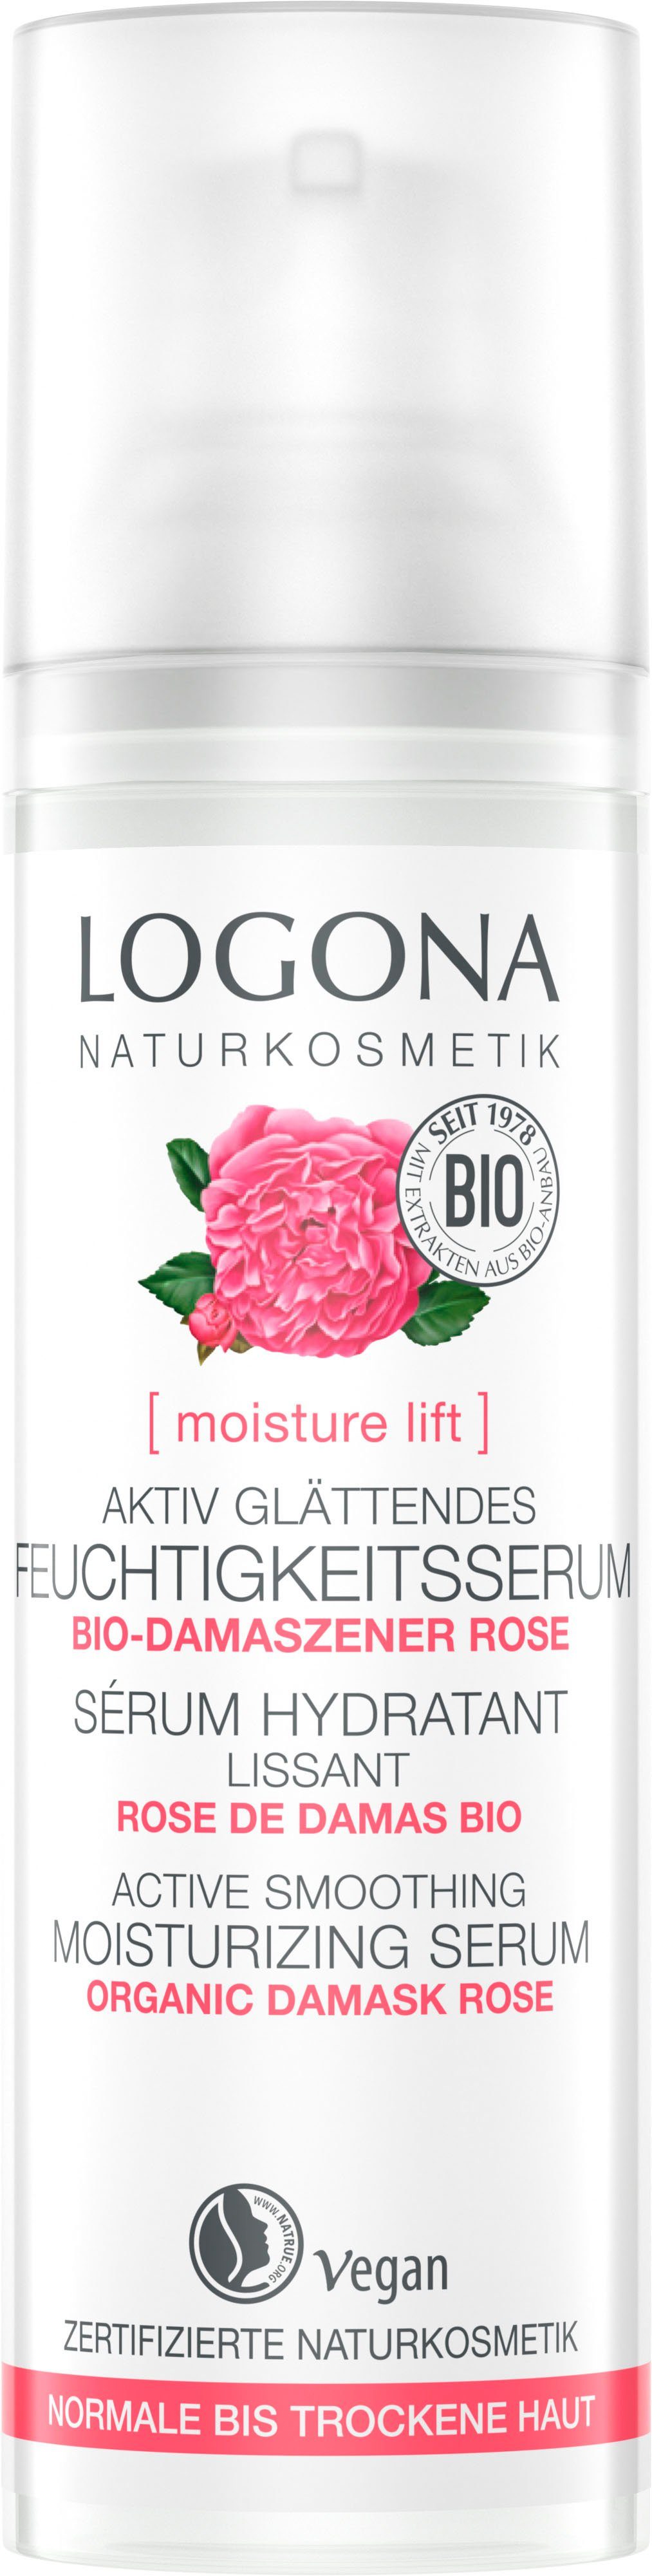 LOGONA Gesichtsserum glätt Logona Feuchtigk.serum lift moisture